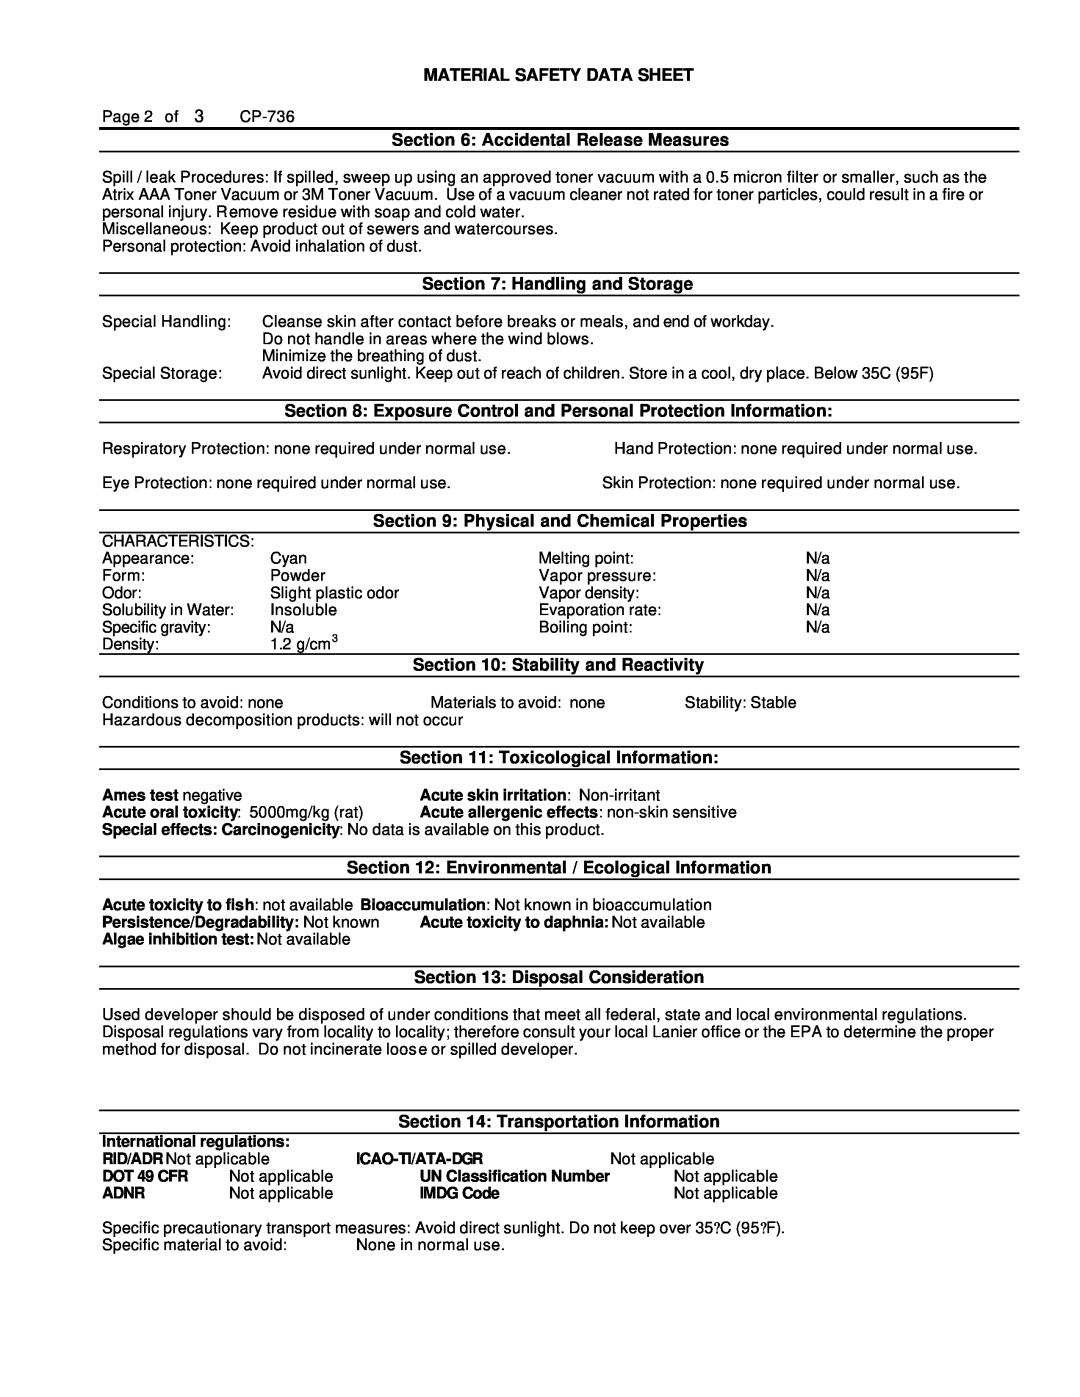 Lanier RS232 manual Material Safety Data Sheet 